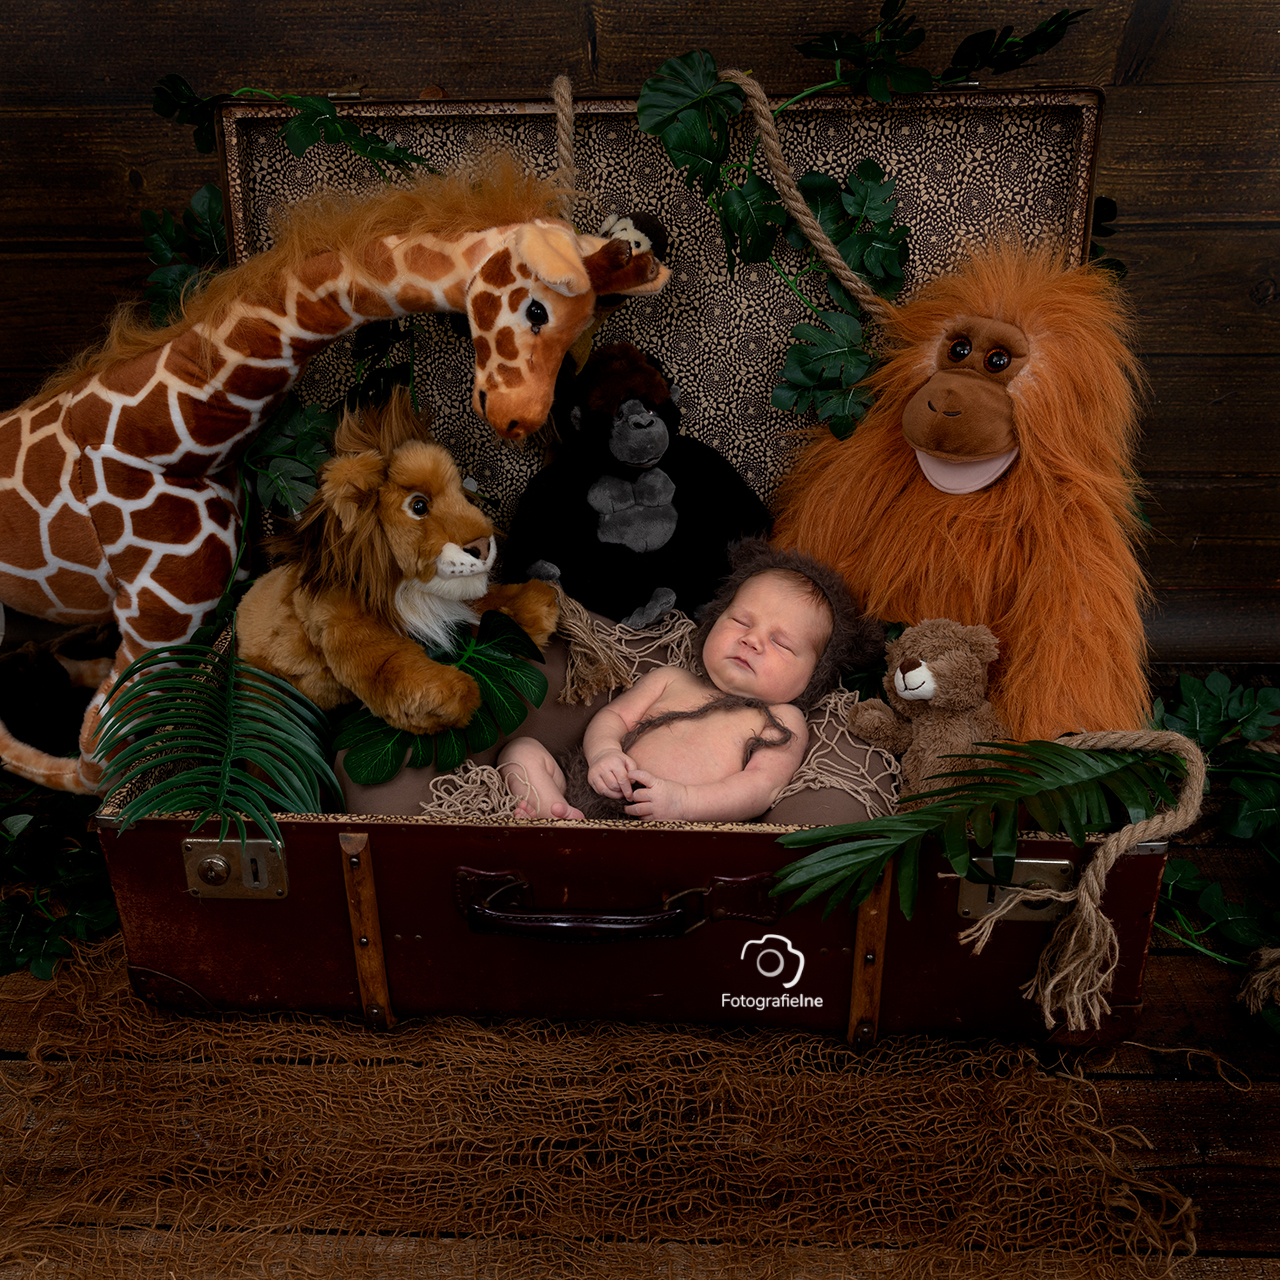 Fotografie-Ine 233A3862 newborn Jungle safari thema giraffe – aap tijger leeuw